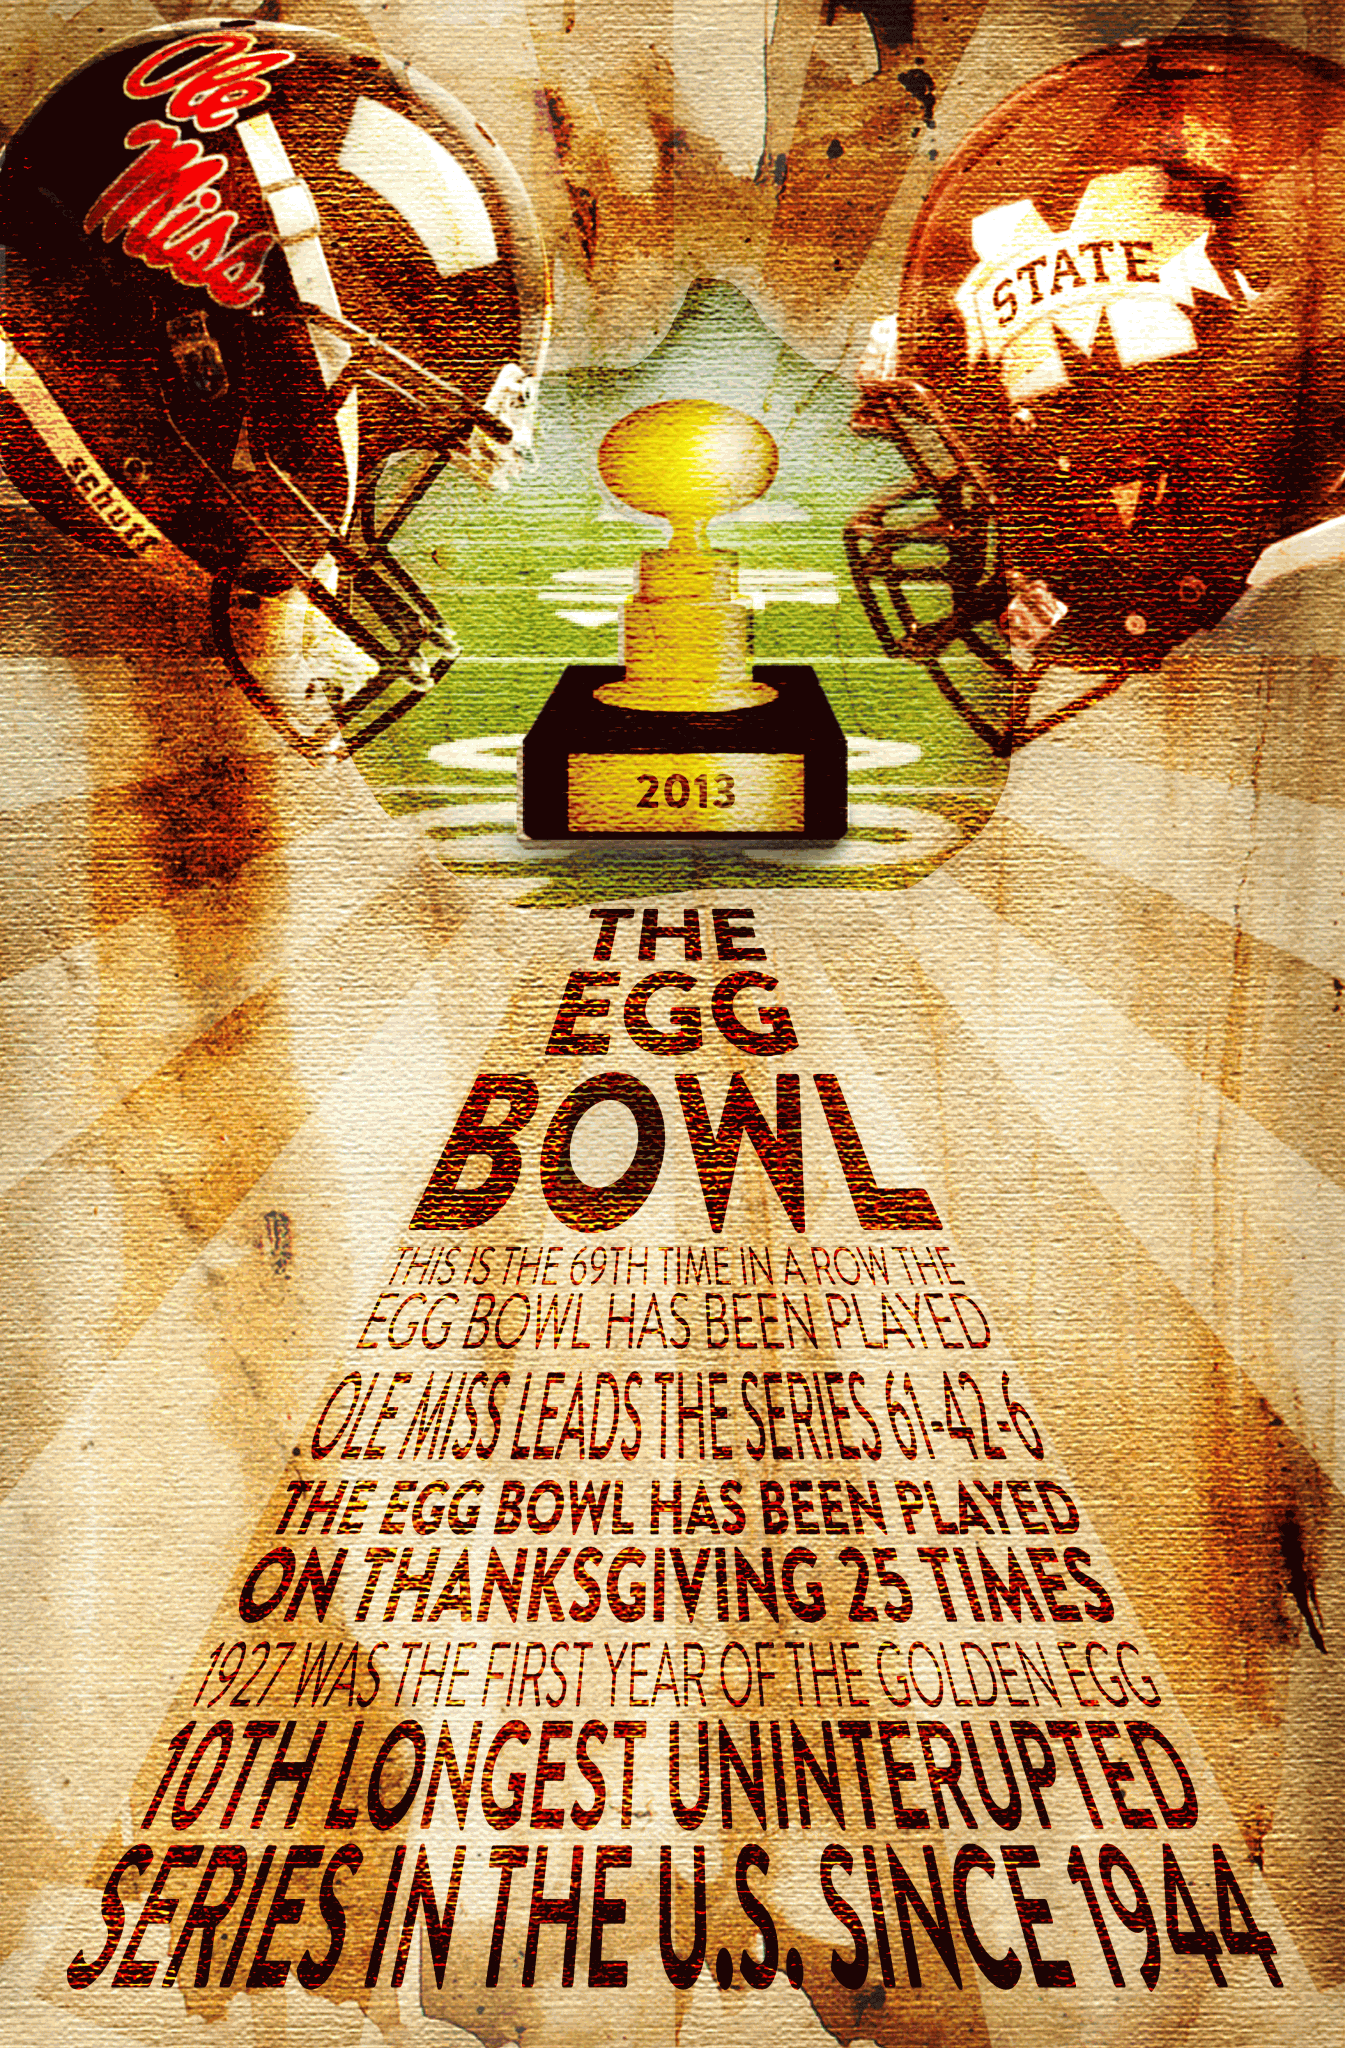 Egg Bowl 2013 Ole Miss News